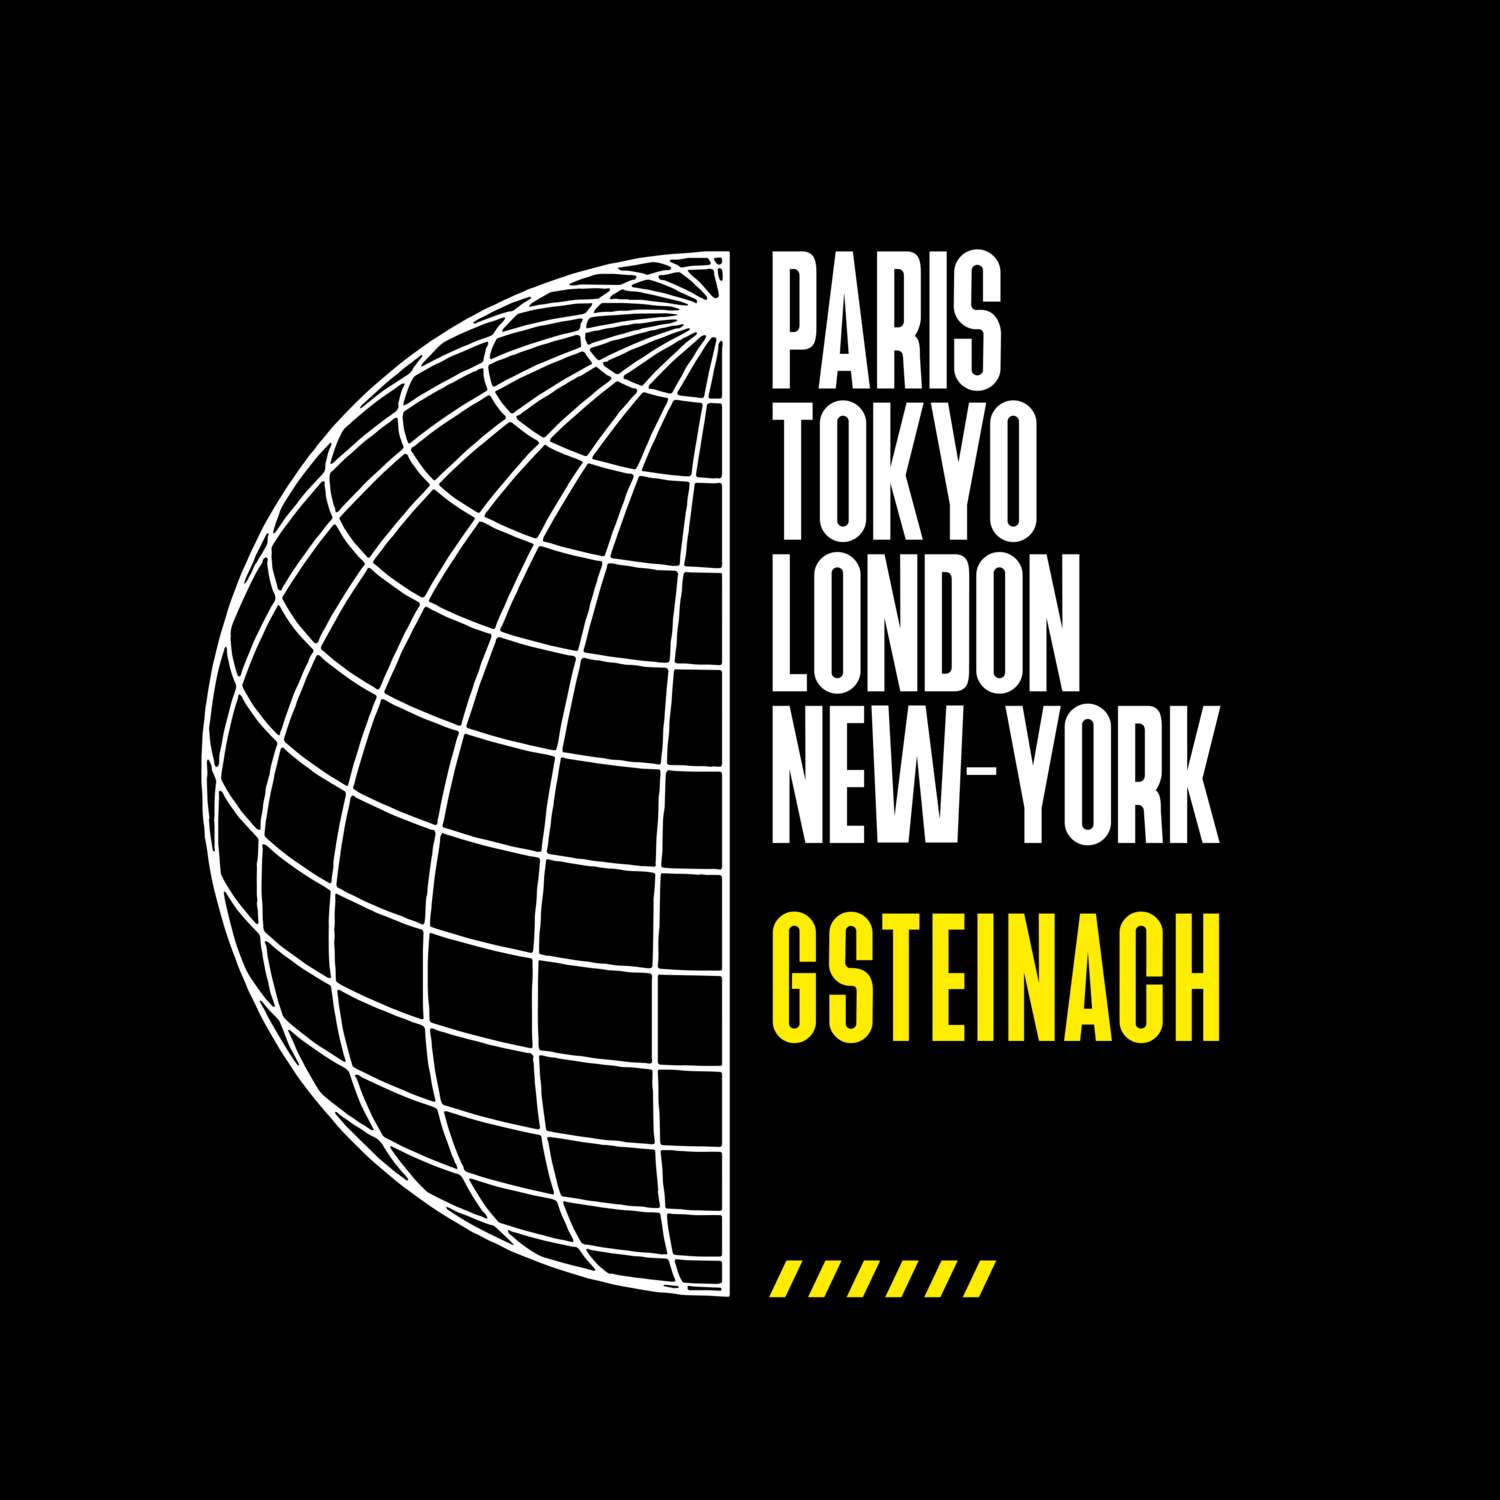 Gsteinach T-Shirt »Paris Tokyo London«